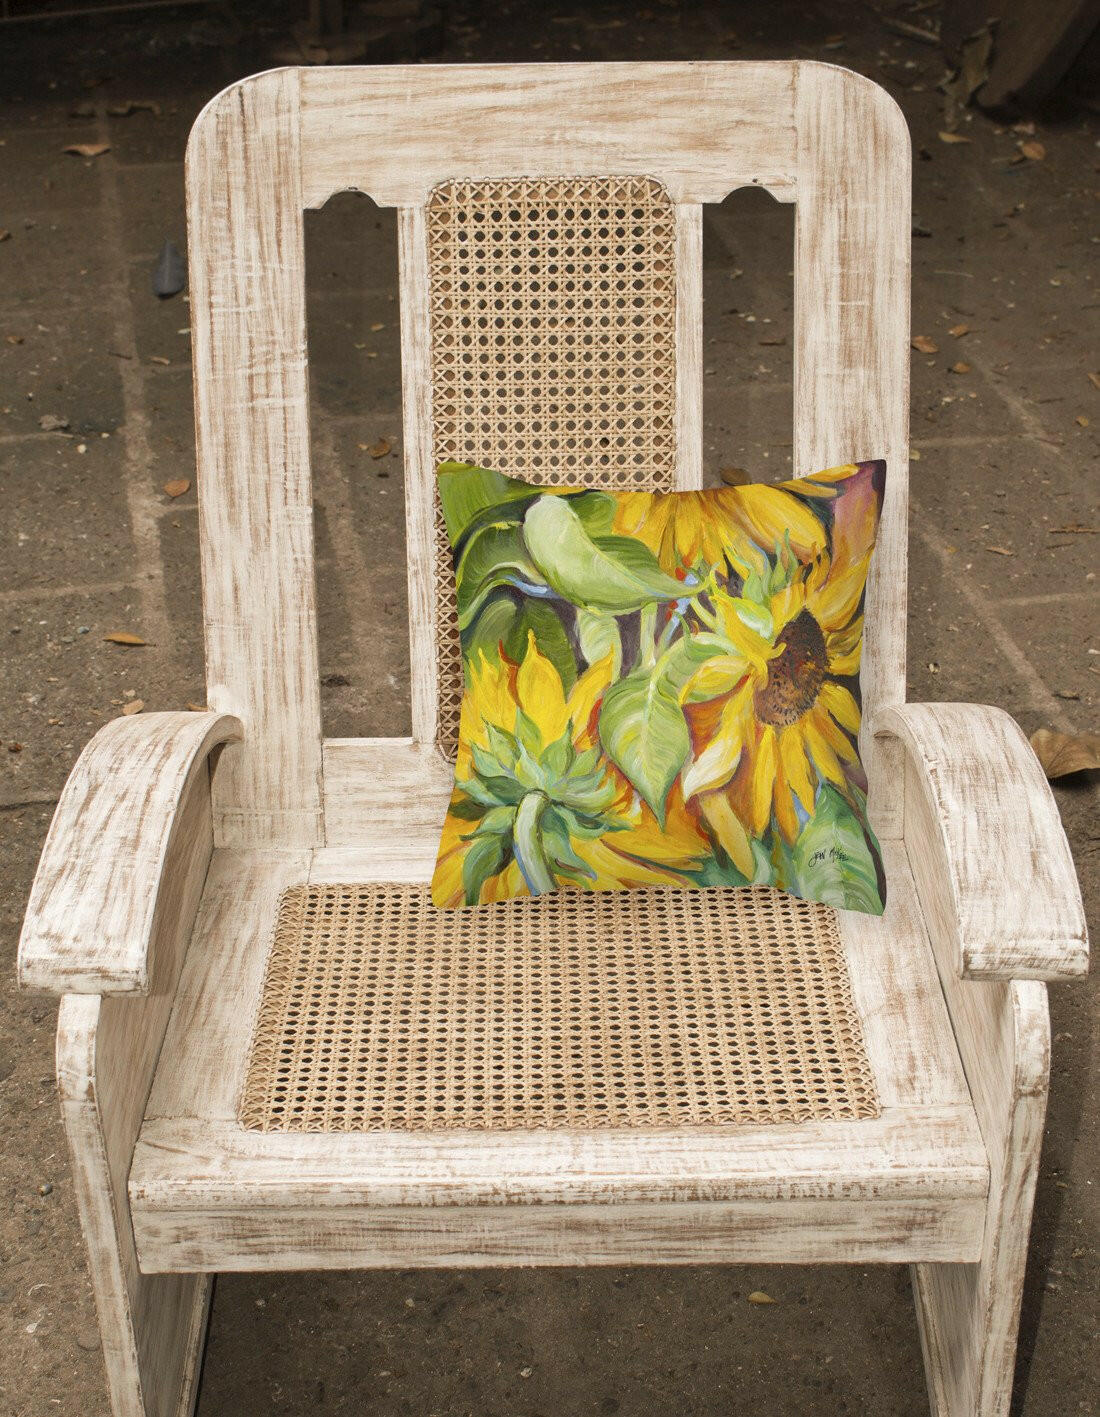 Sunflowers Canvas Fabric Decorative Pillow JMK1266PW1414 by Caroline's Treasures